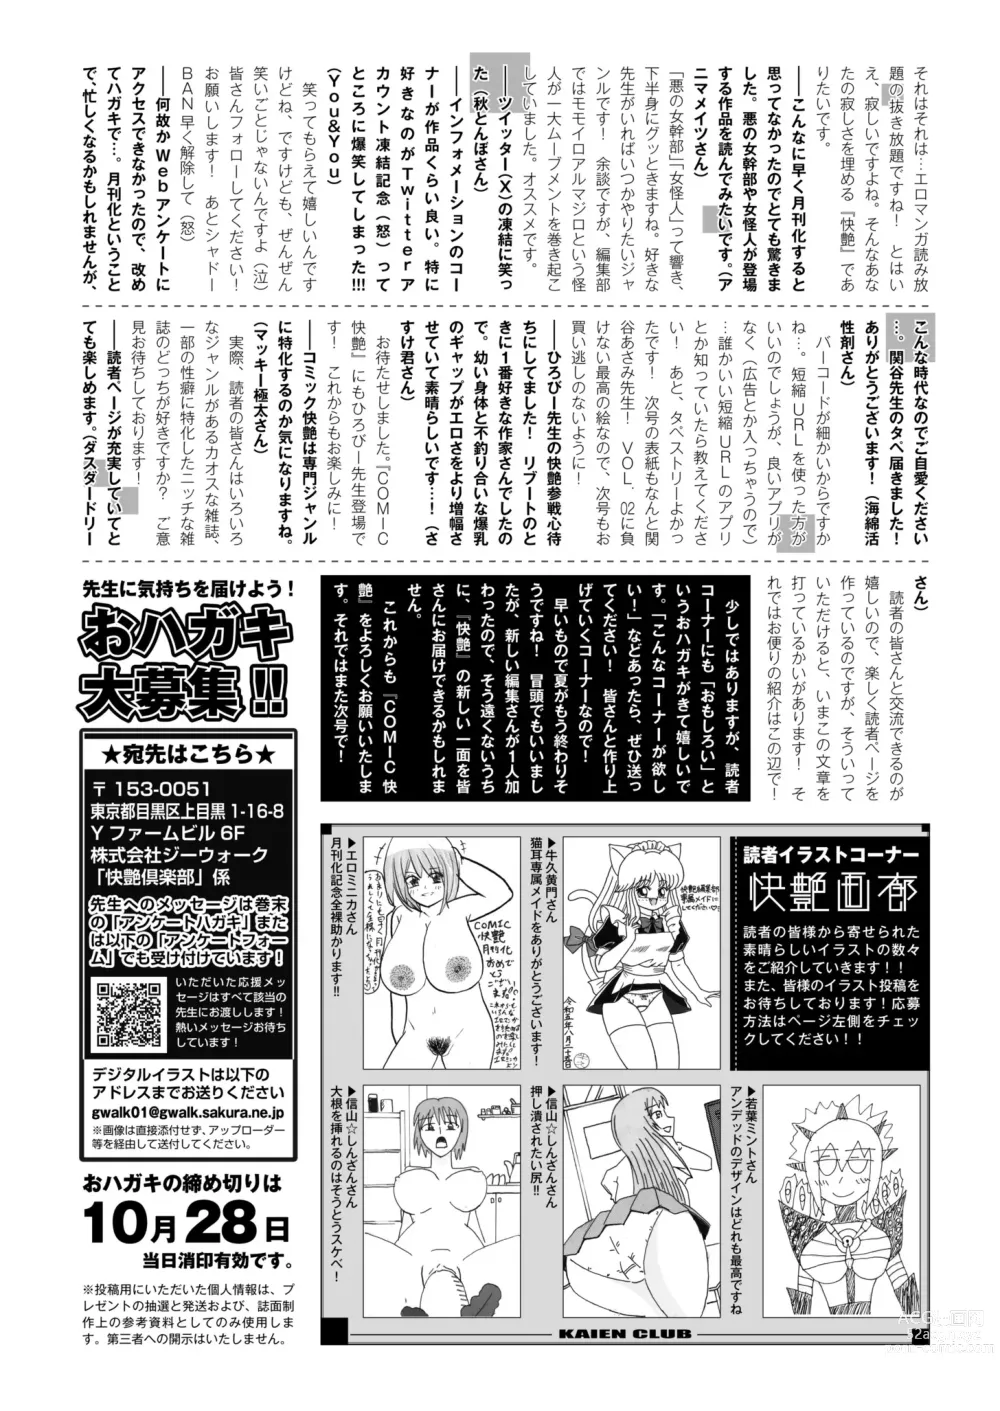 Page 446 of manga COMIC Kaien VOL. 05